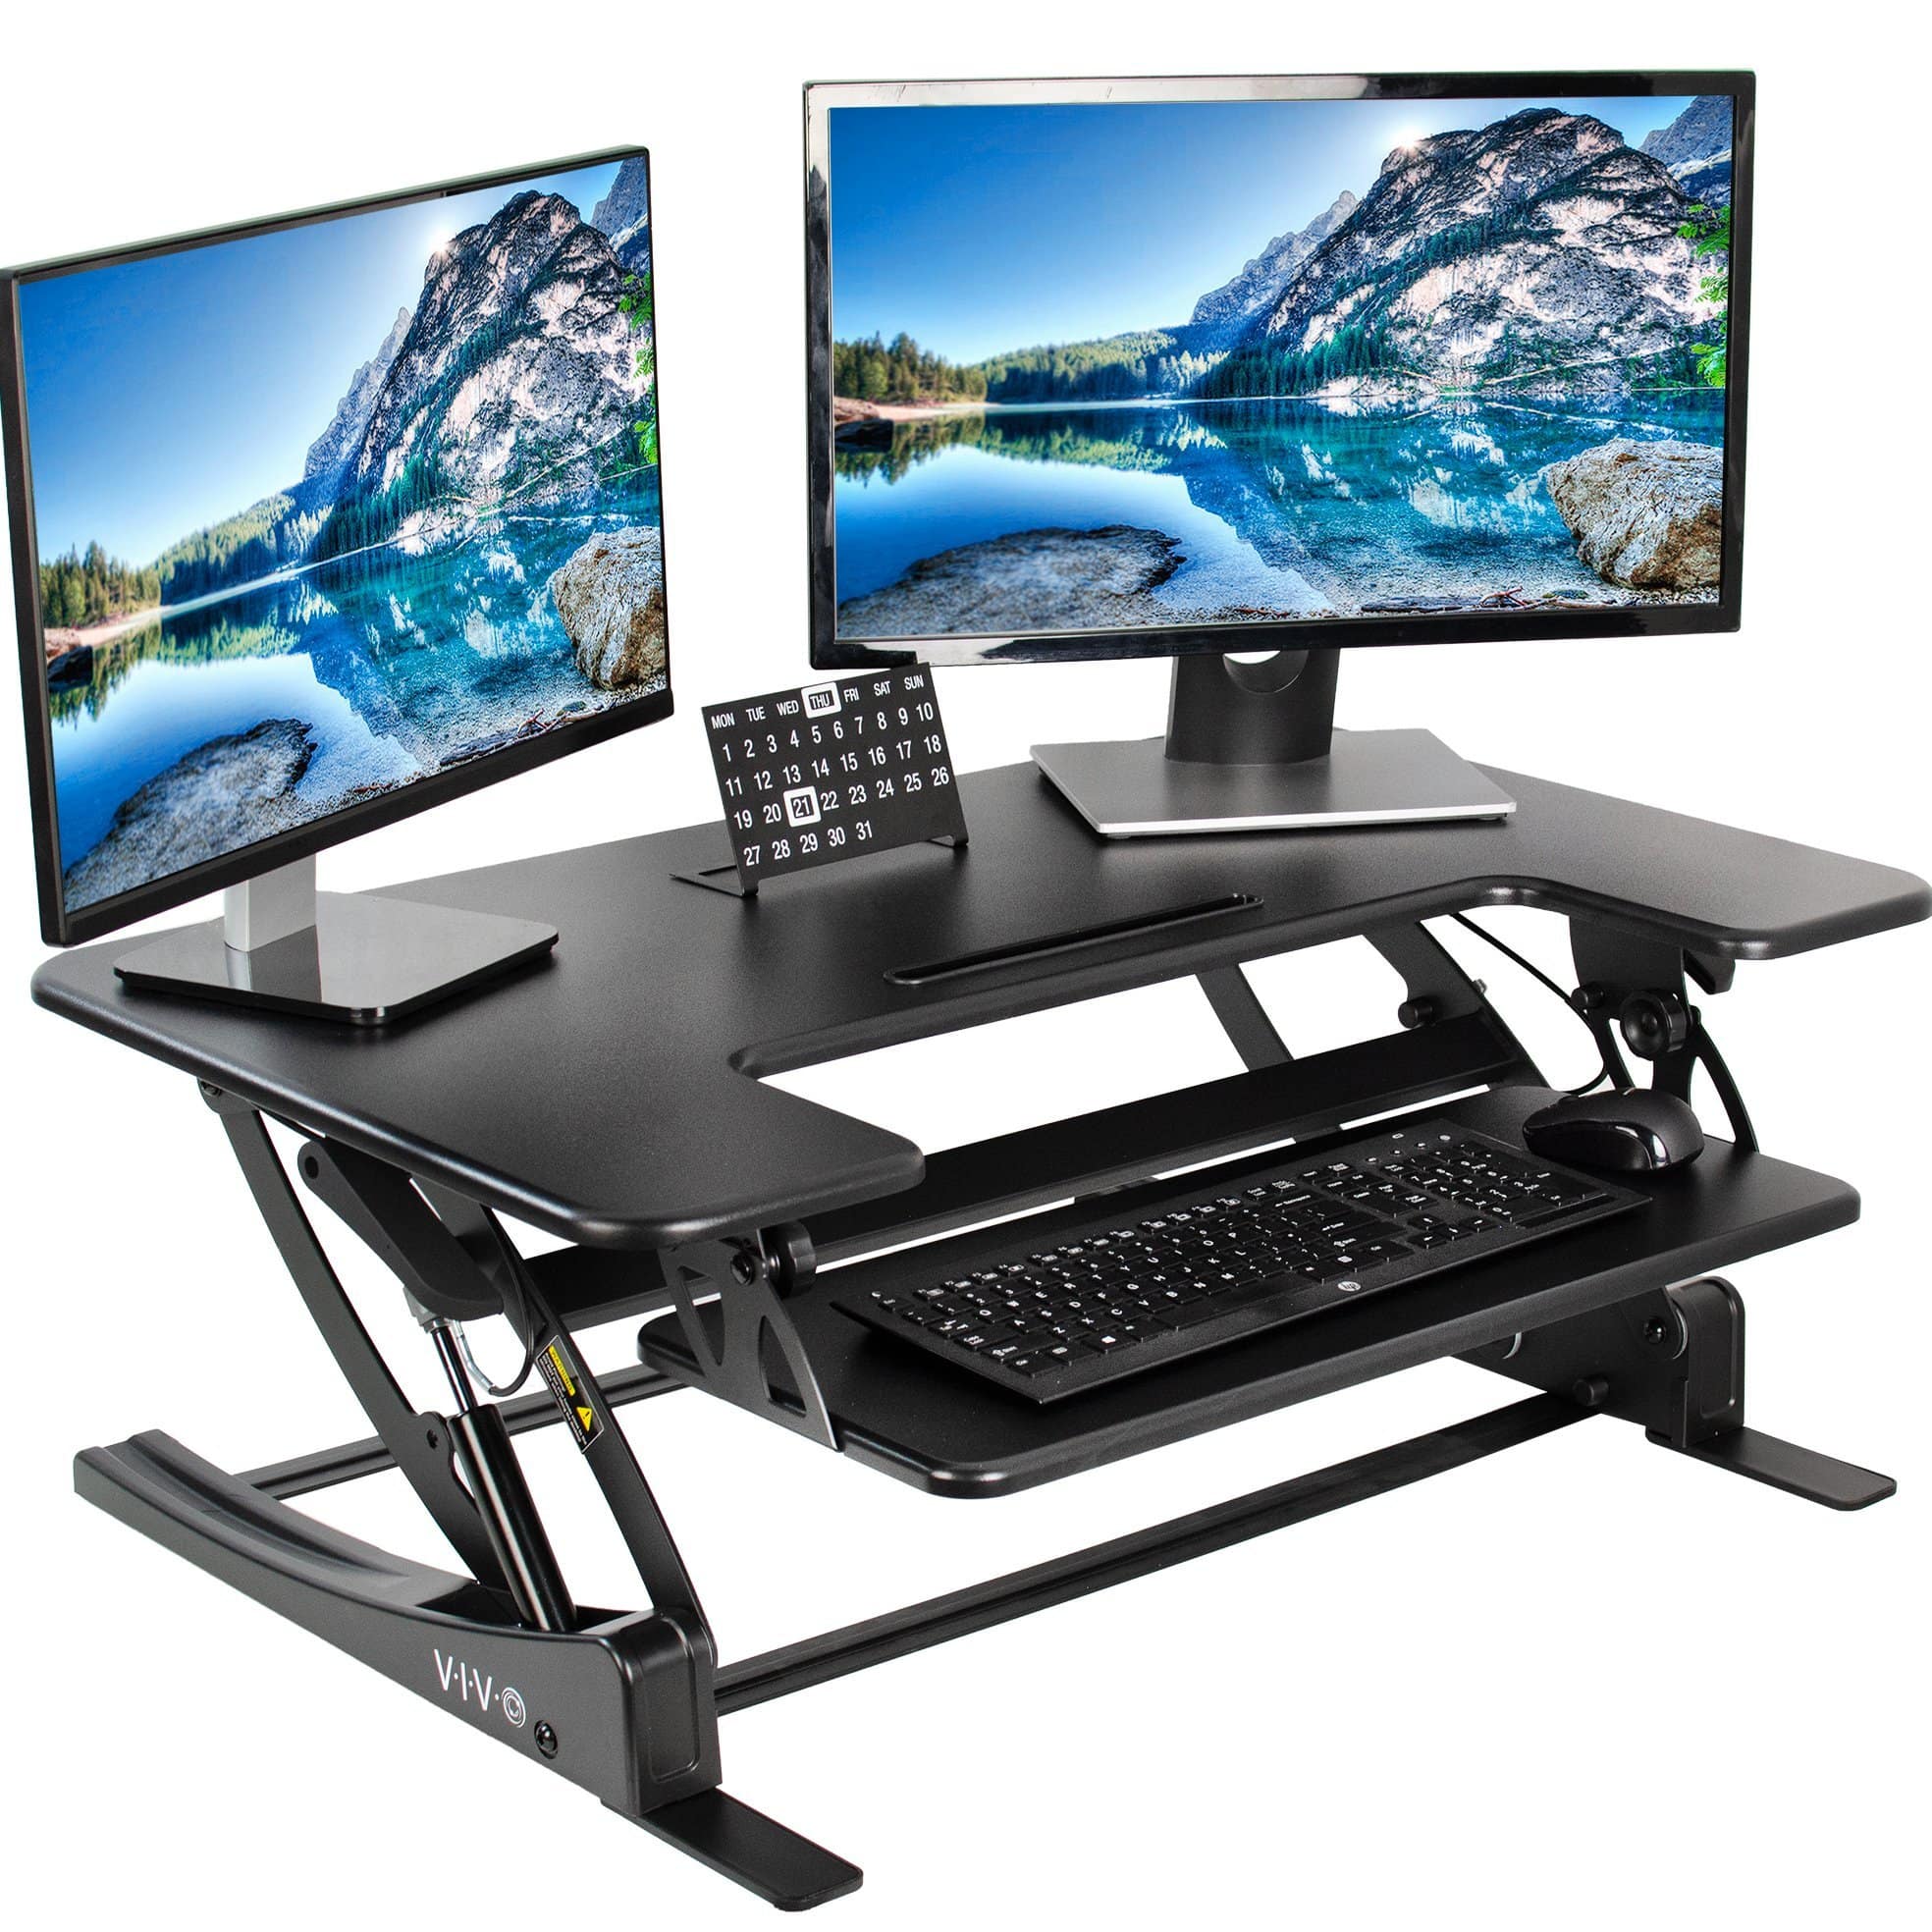 VIVO Steel Desk Monitor Laptop Riser Stand w/ Storage Drawer and 3 USB